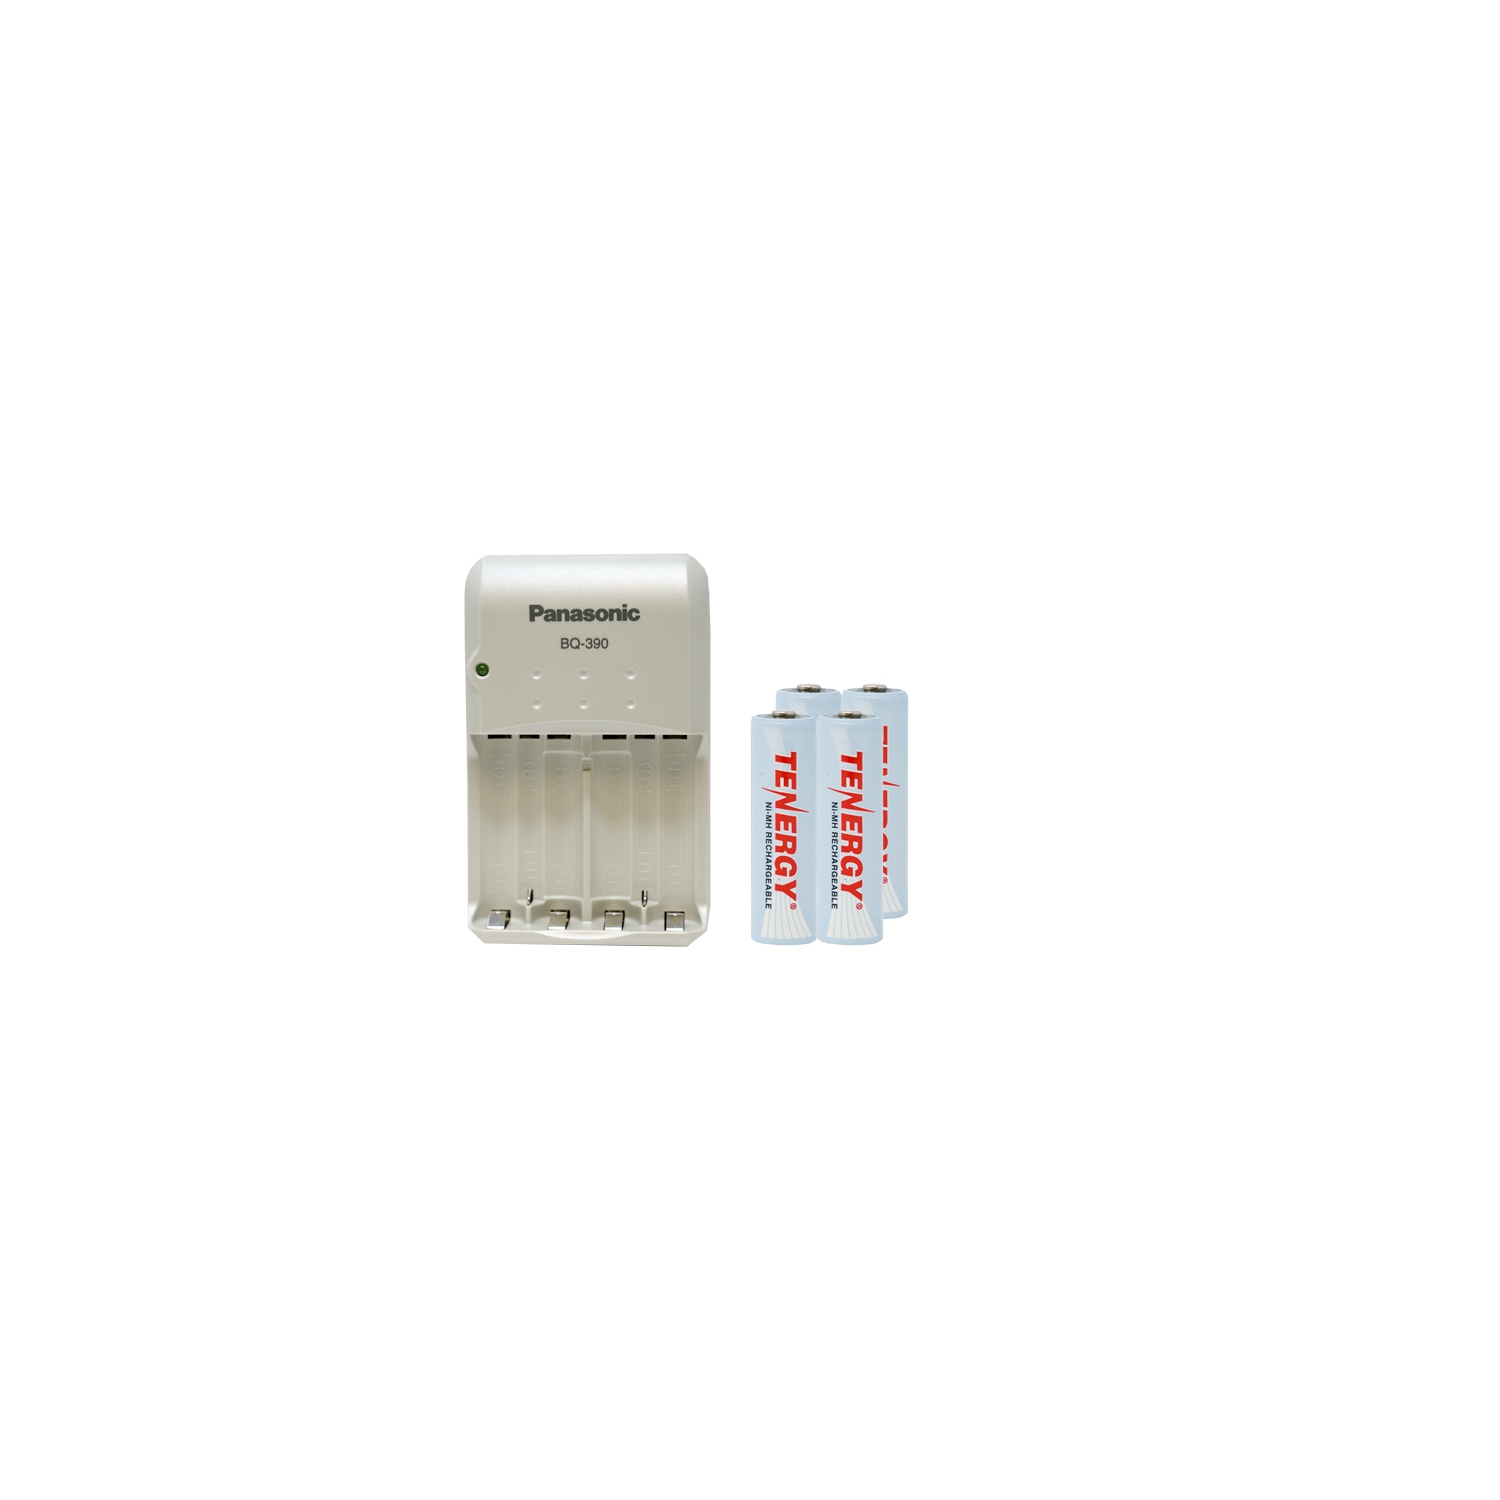 Panasonic BQ-390 Smart Battery Charger + 4 AA Tenergy NiMH Rechargeable Batteries (2500 mAh)